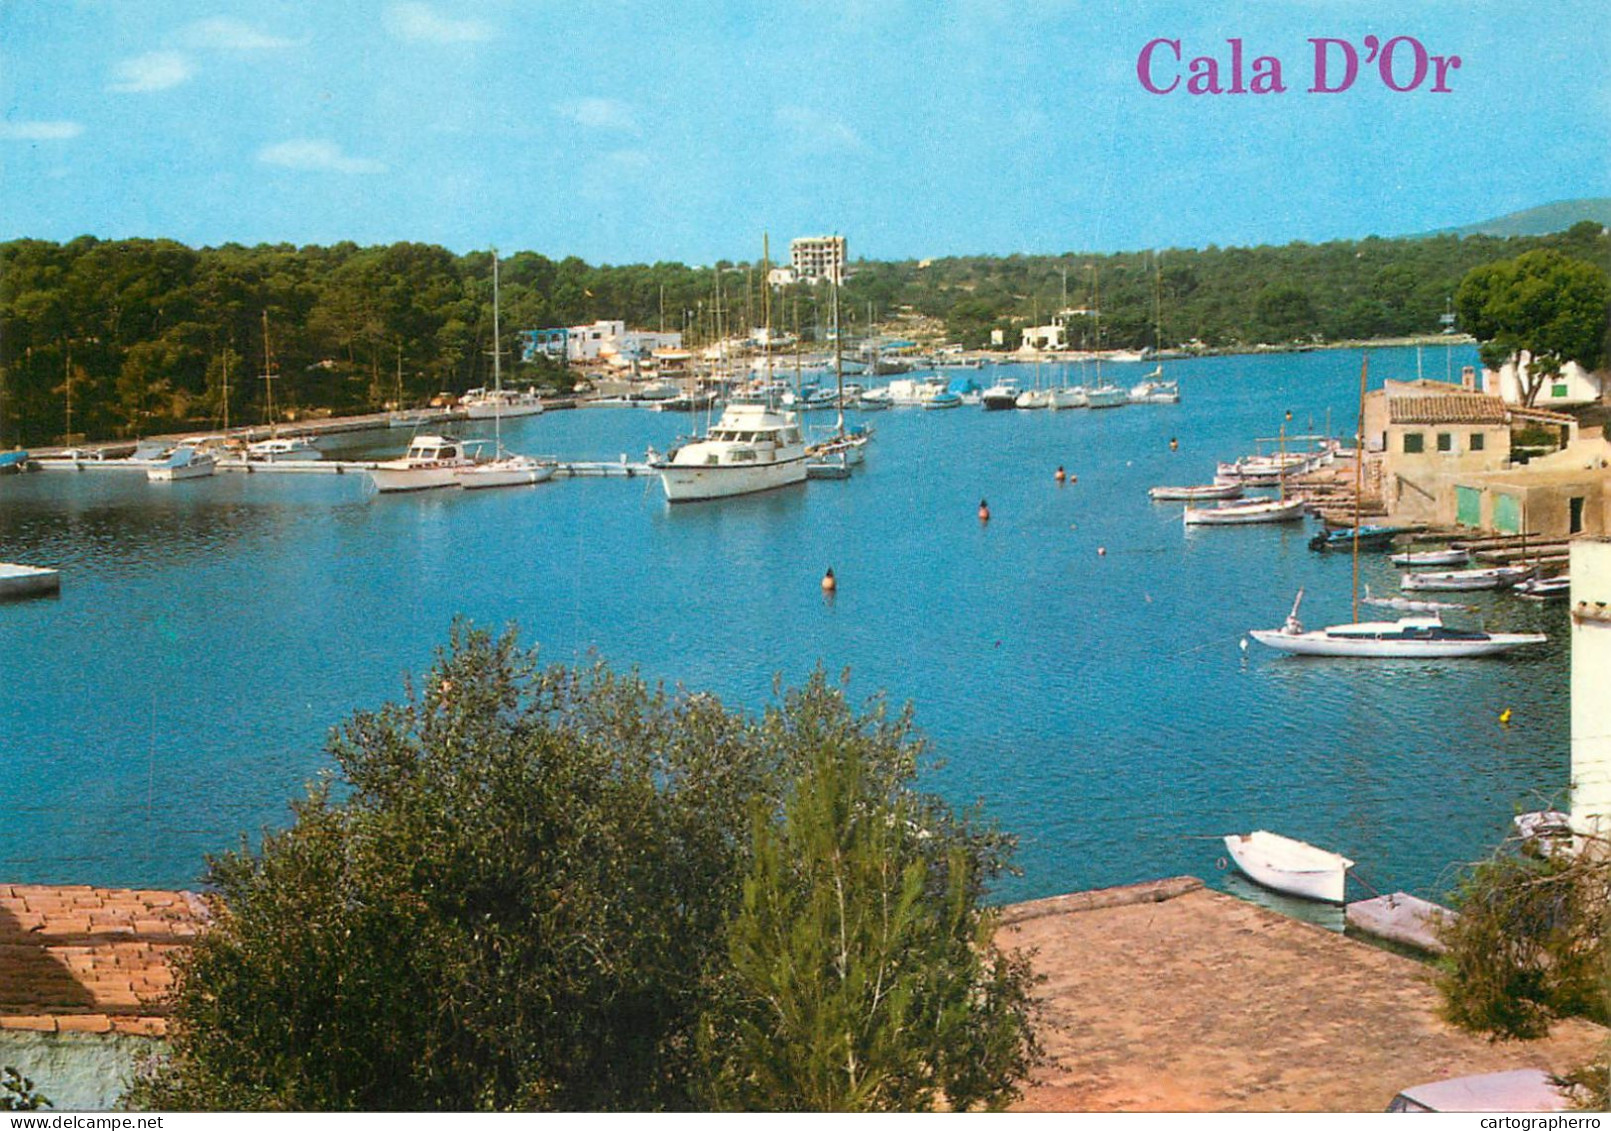 Navigation Sailing Vessels & Boats Themed Postcard Cala D'Or Puerto Deportivo - Sailing Vessels